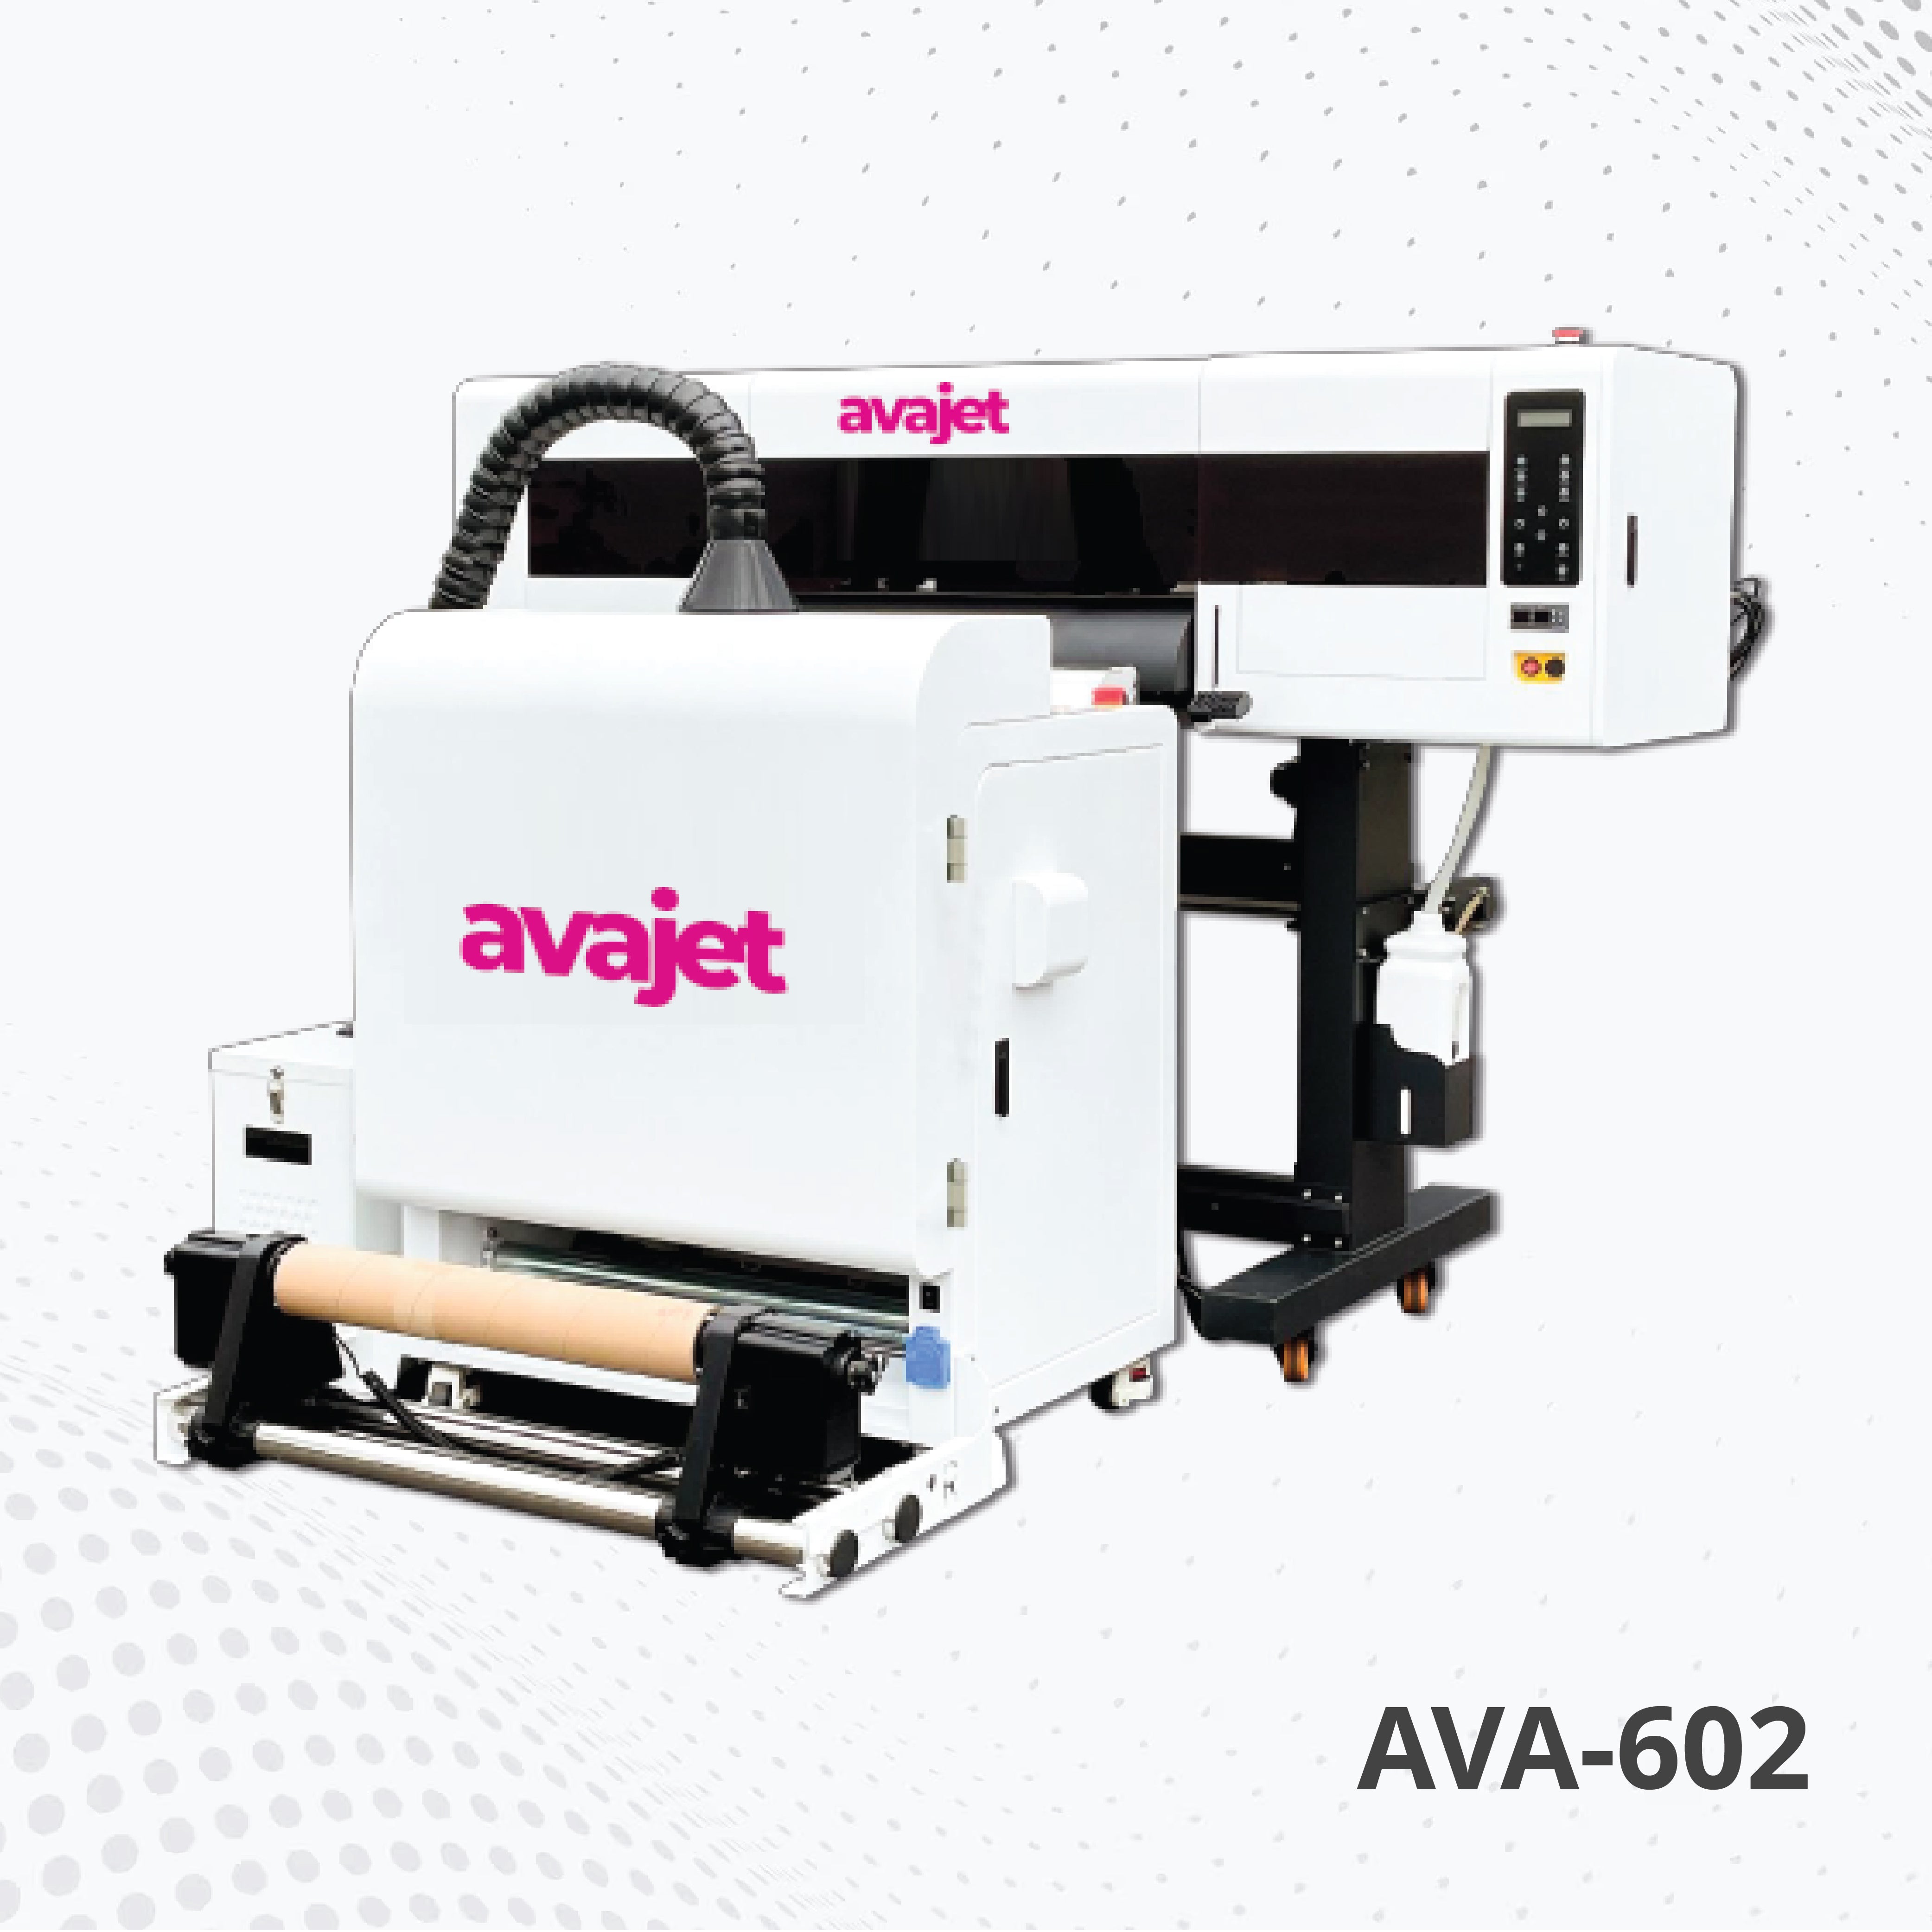 avajet AVA-602 DTF Printer